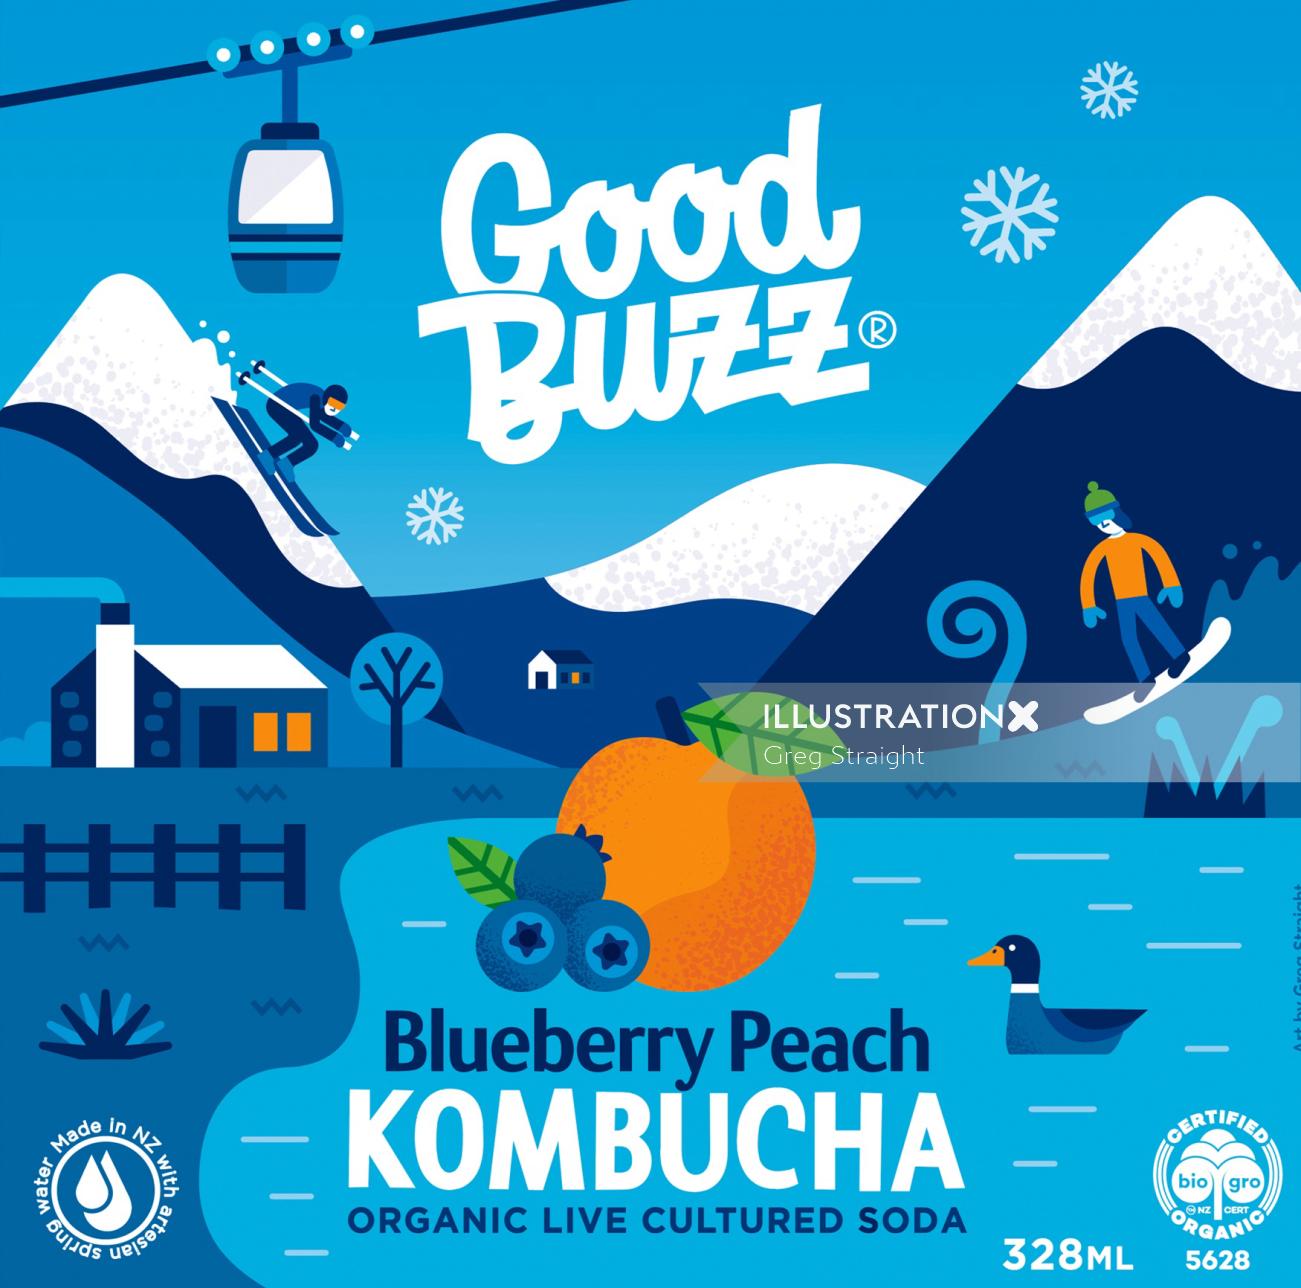 Blueberry Peach Kombucha advertising illustration 